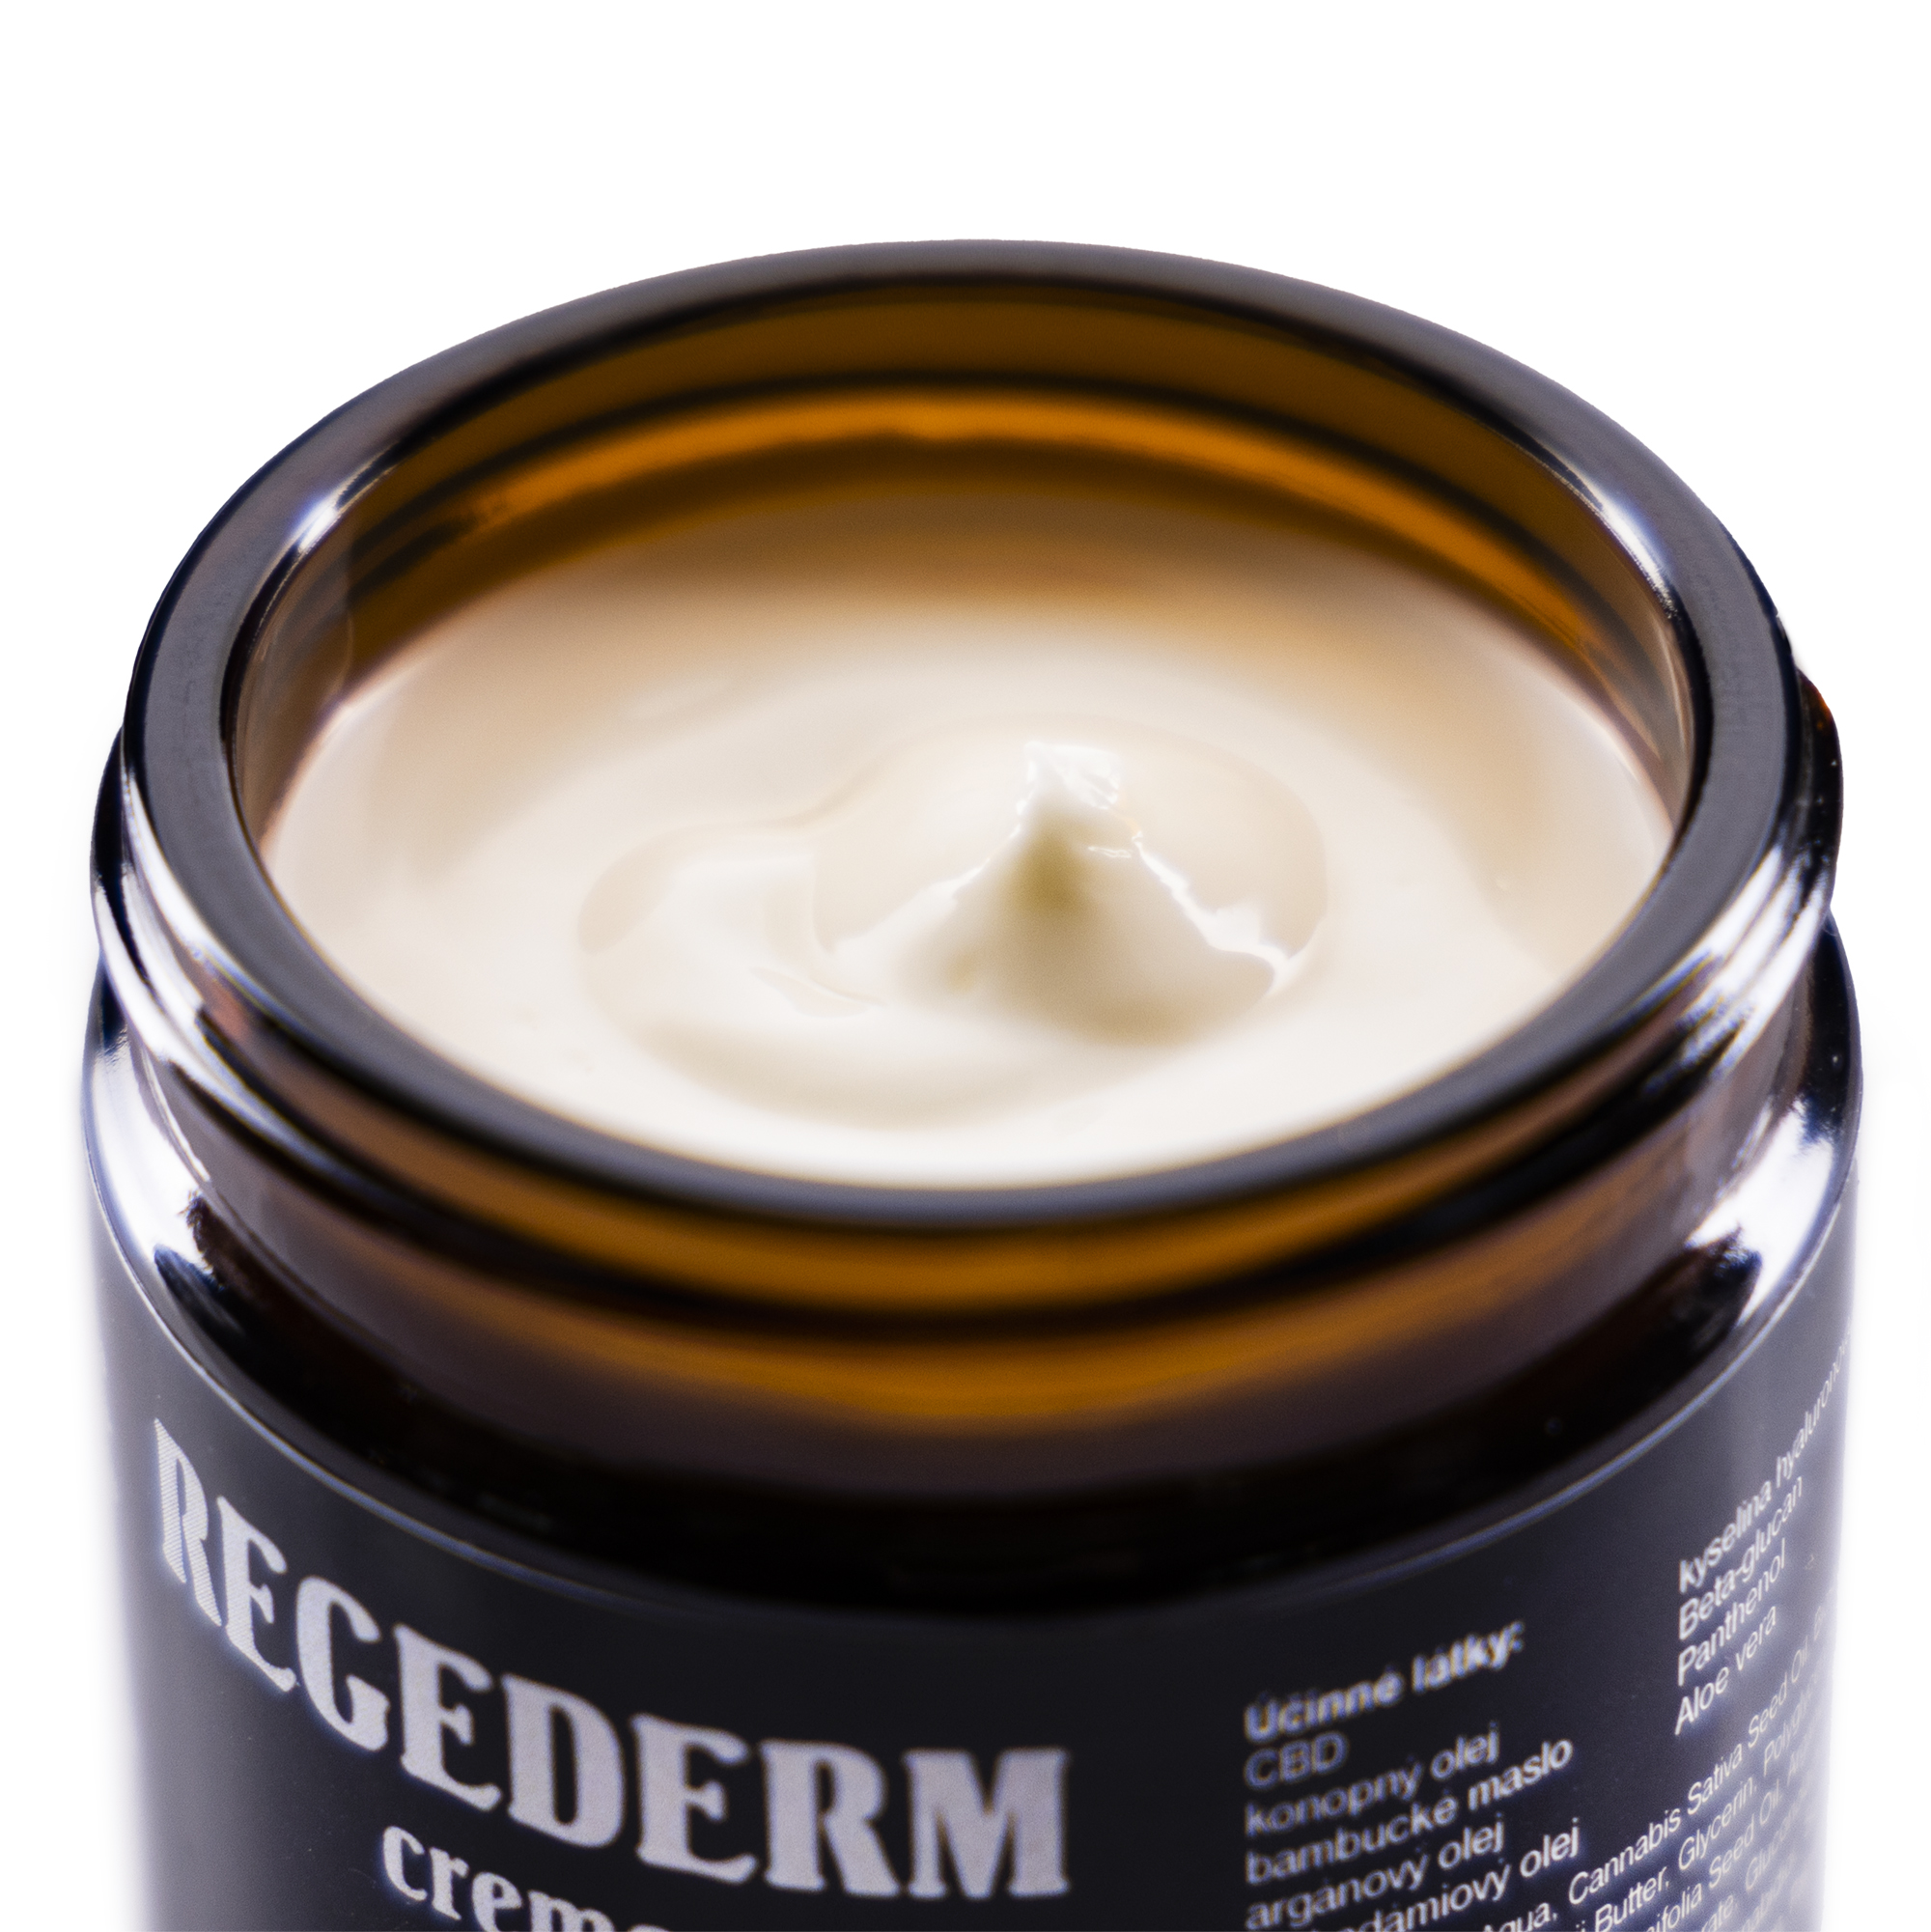 Regederm - creme +CBD 60ml s vôňou levandule